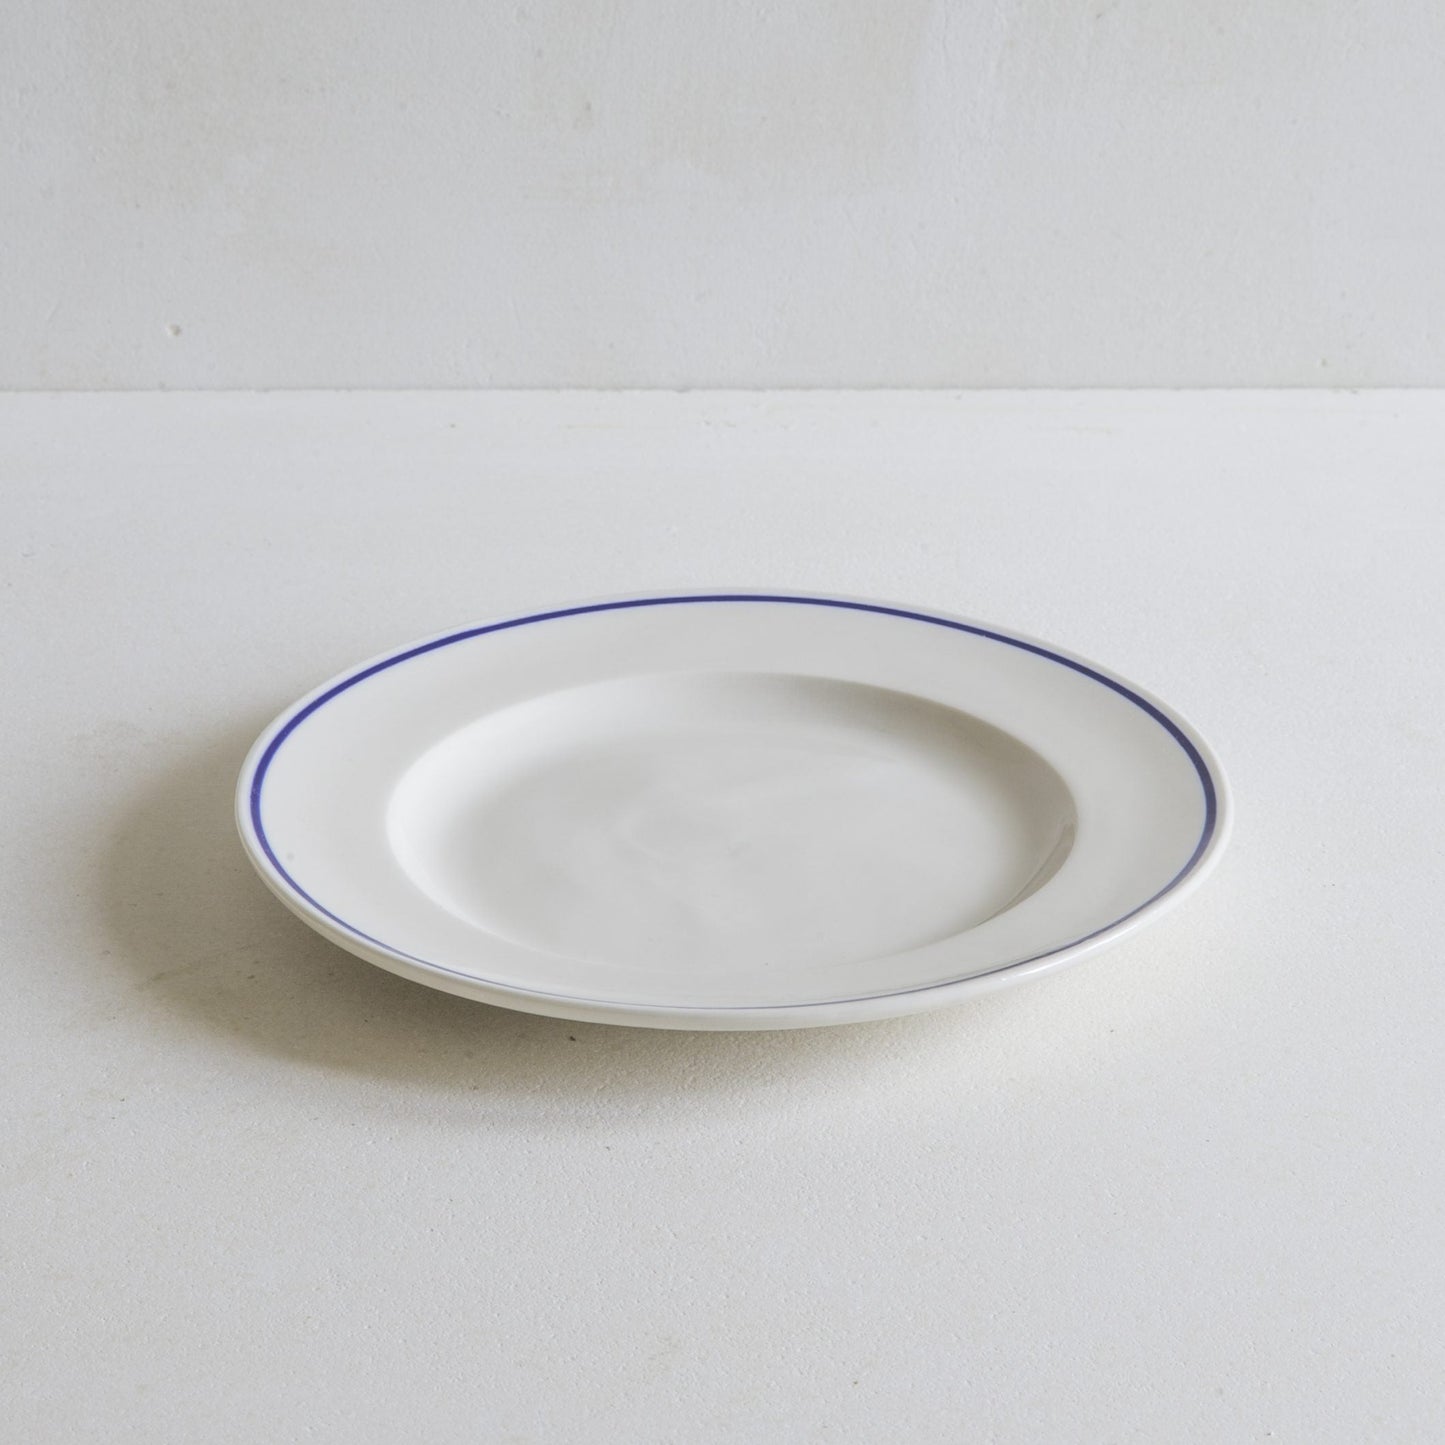 Porcelain side plate with blue line